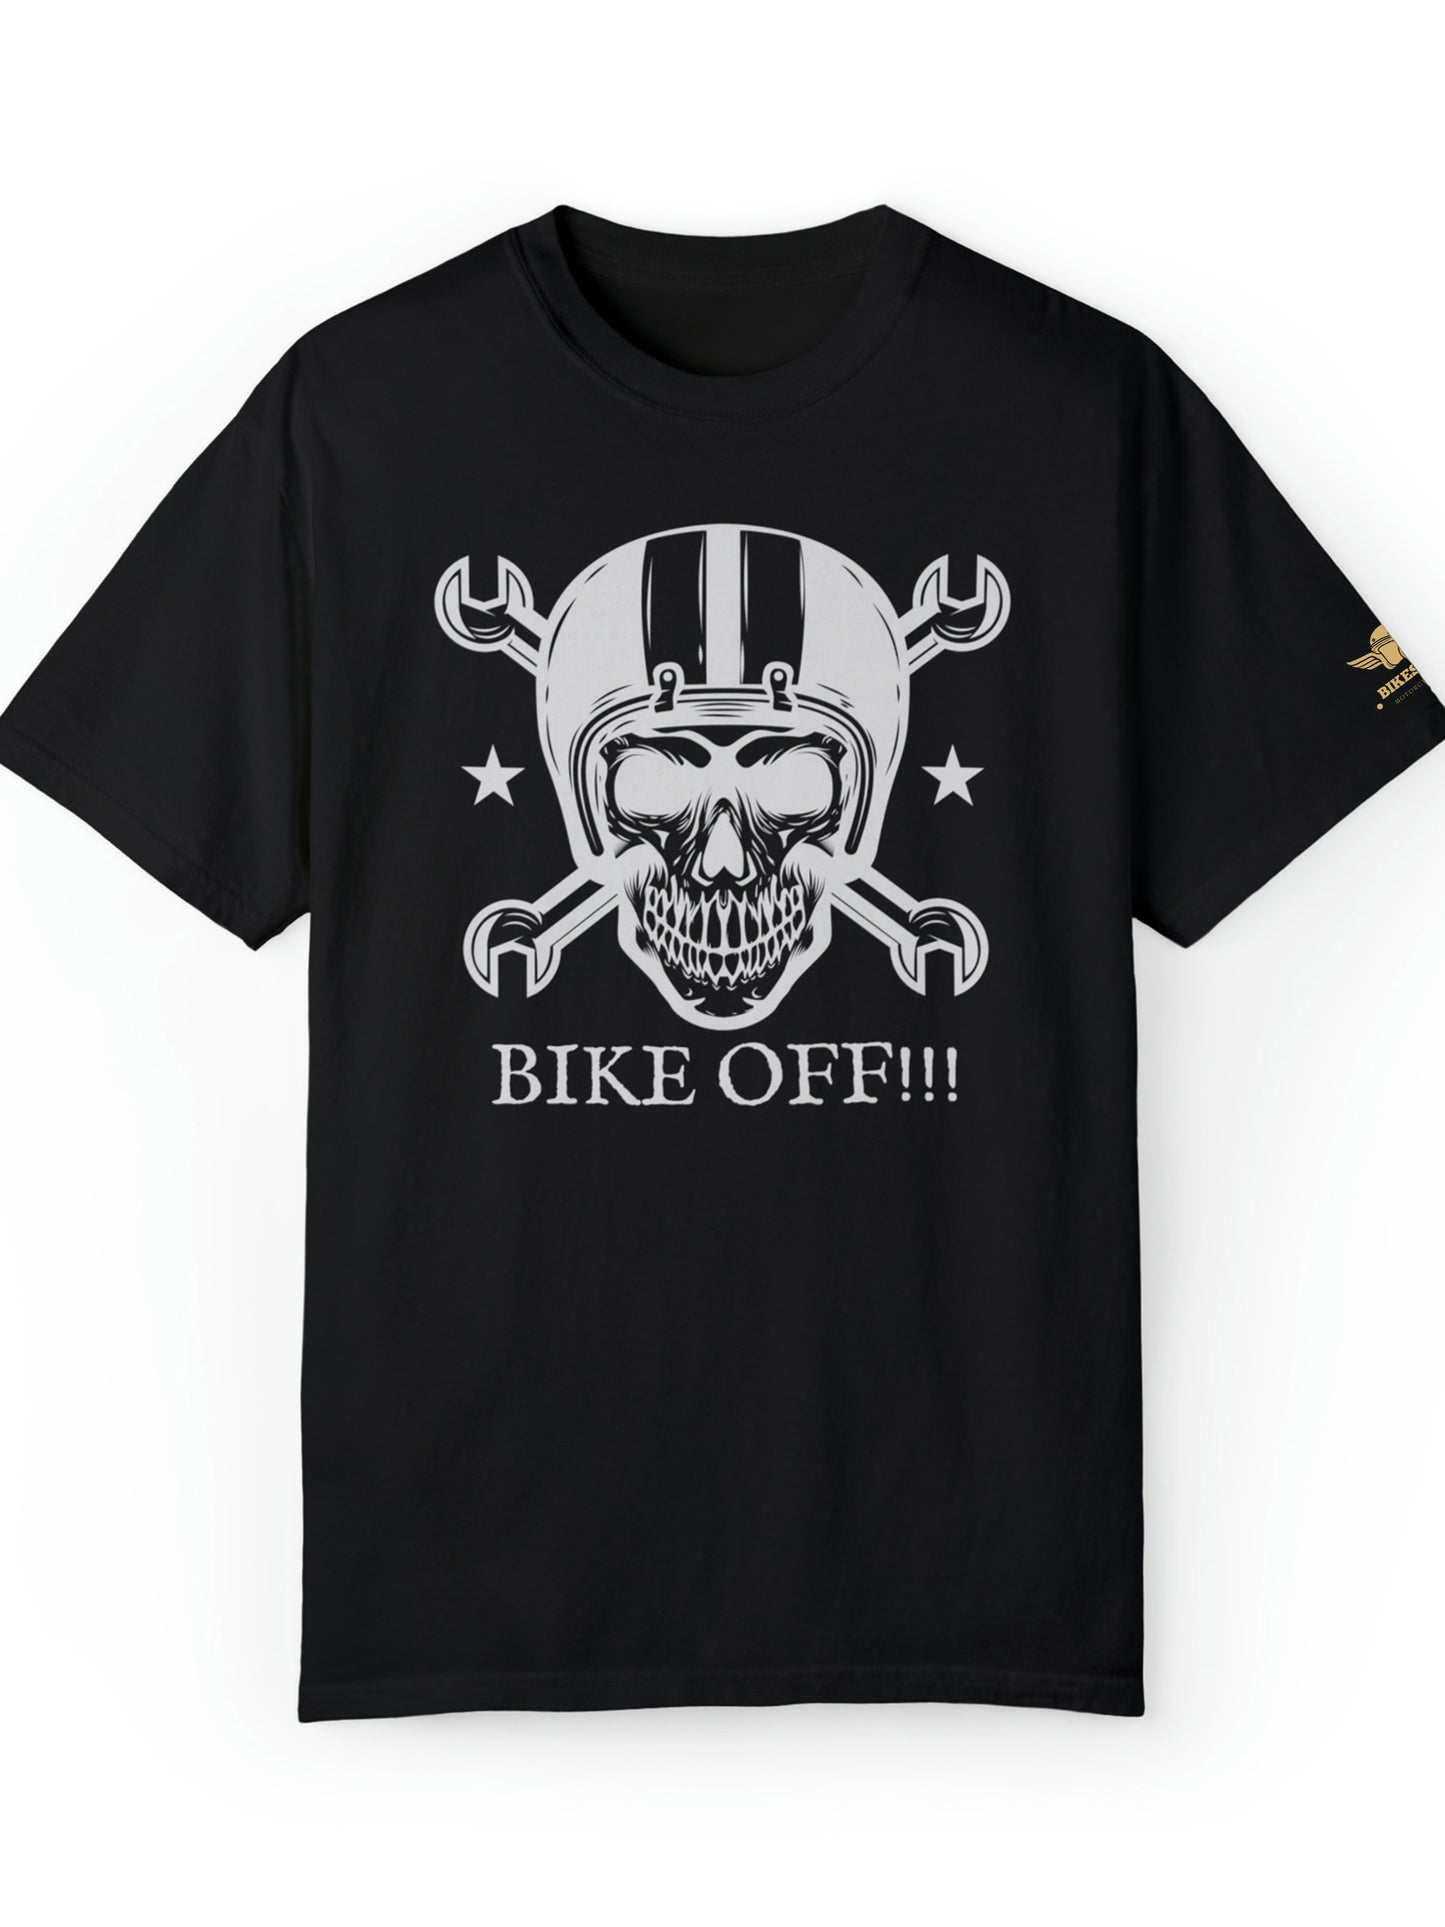 T-shirt moto manica corta nera - Bike off!!!